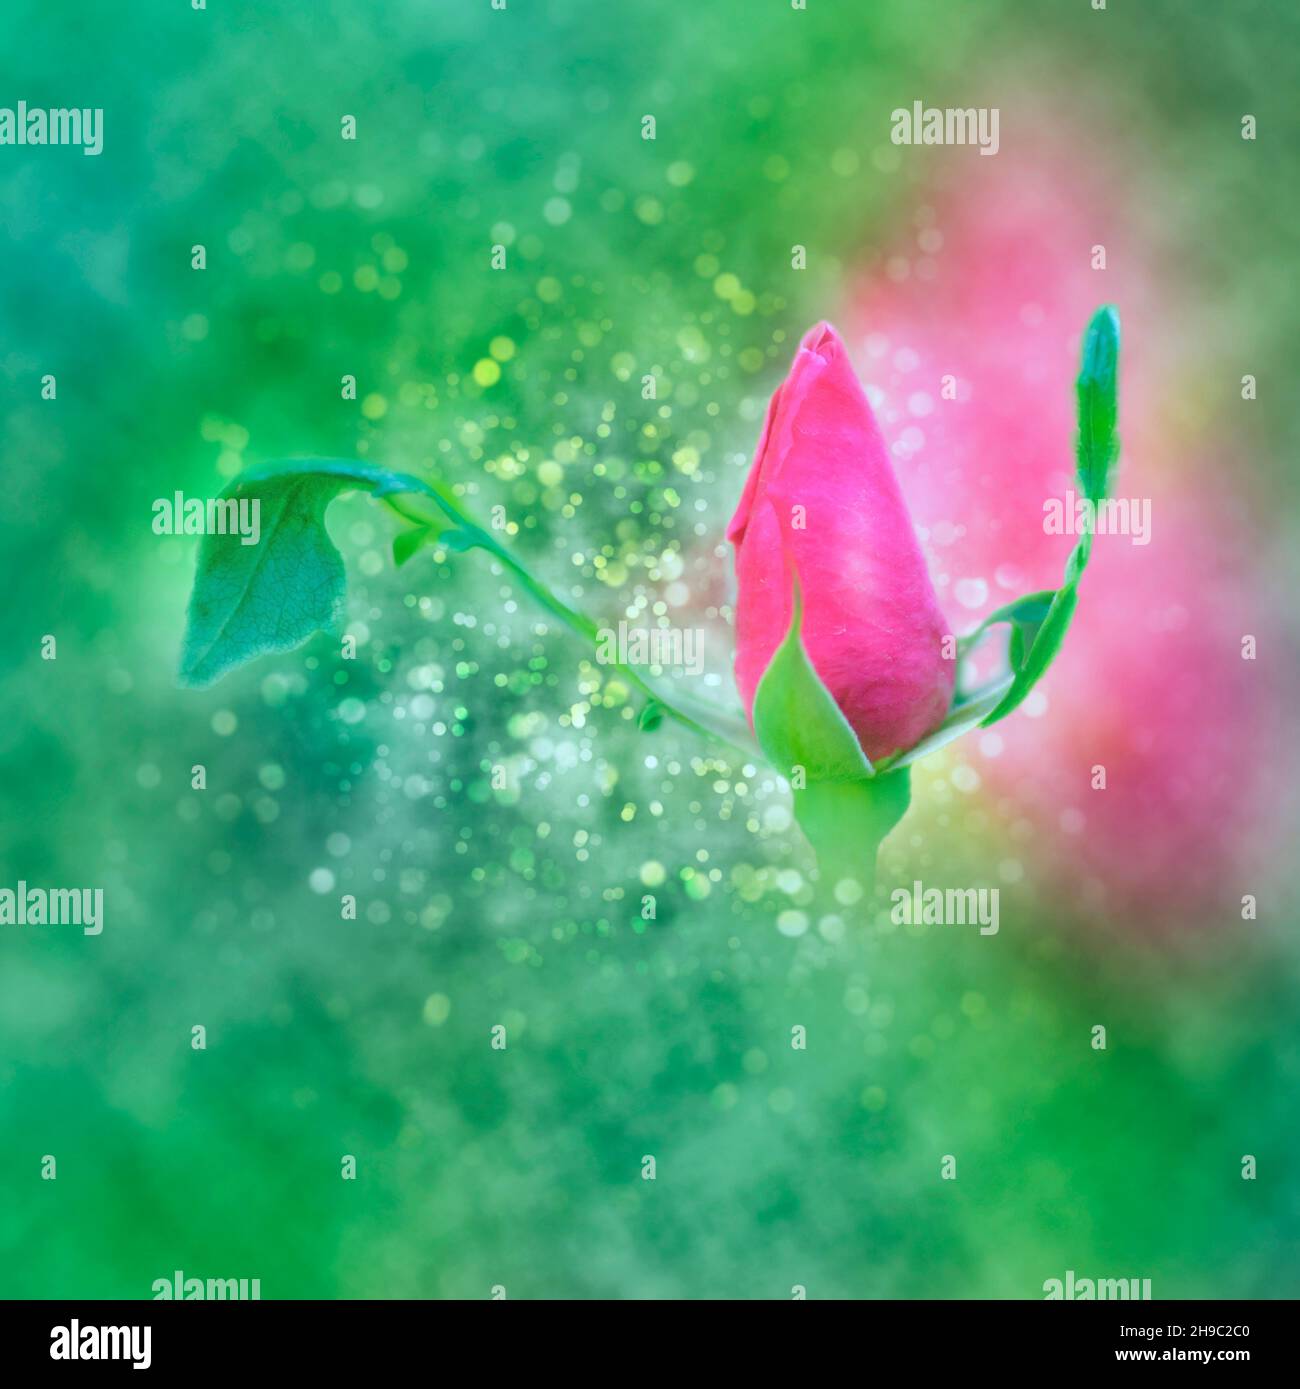 Digitally manipulated exploding red Rose bud Stock Photo